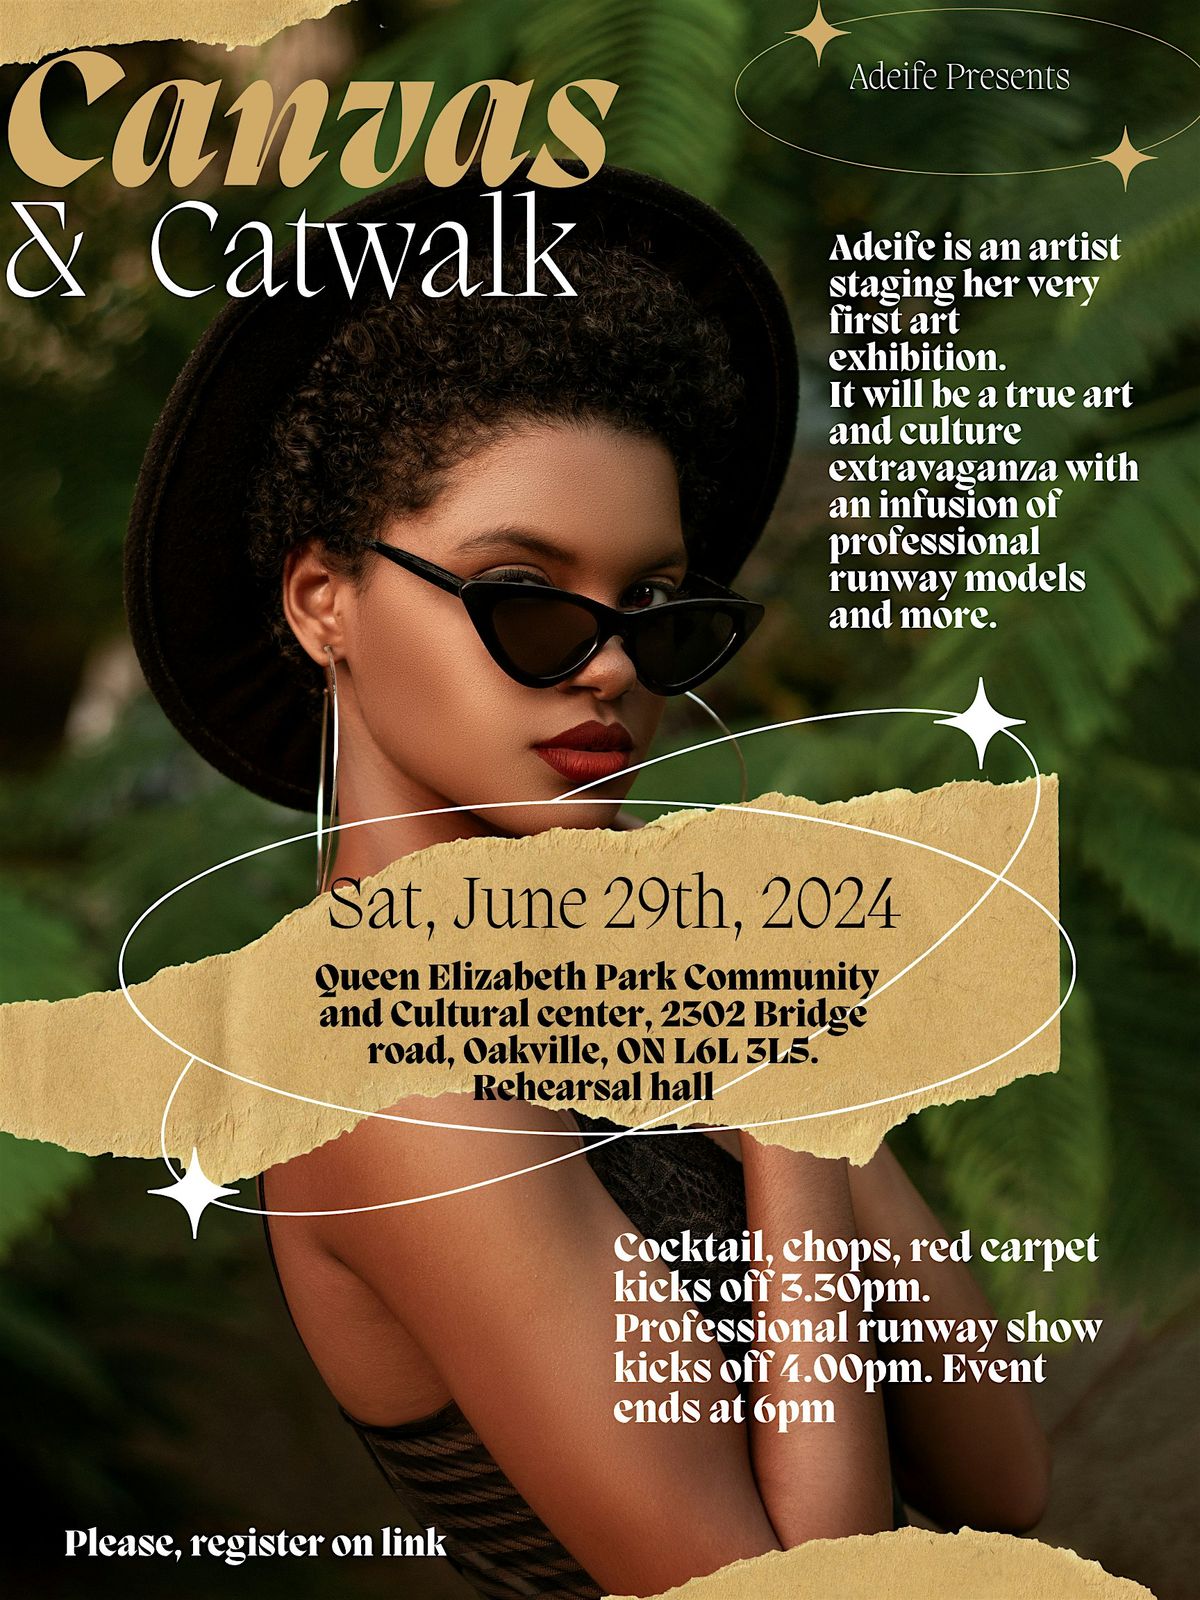 Oakville Canvas & Catwalk Art & Runway event, June 29th, Oakville Toronto.